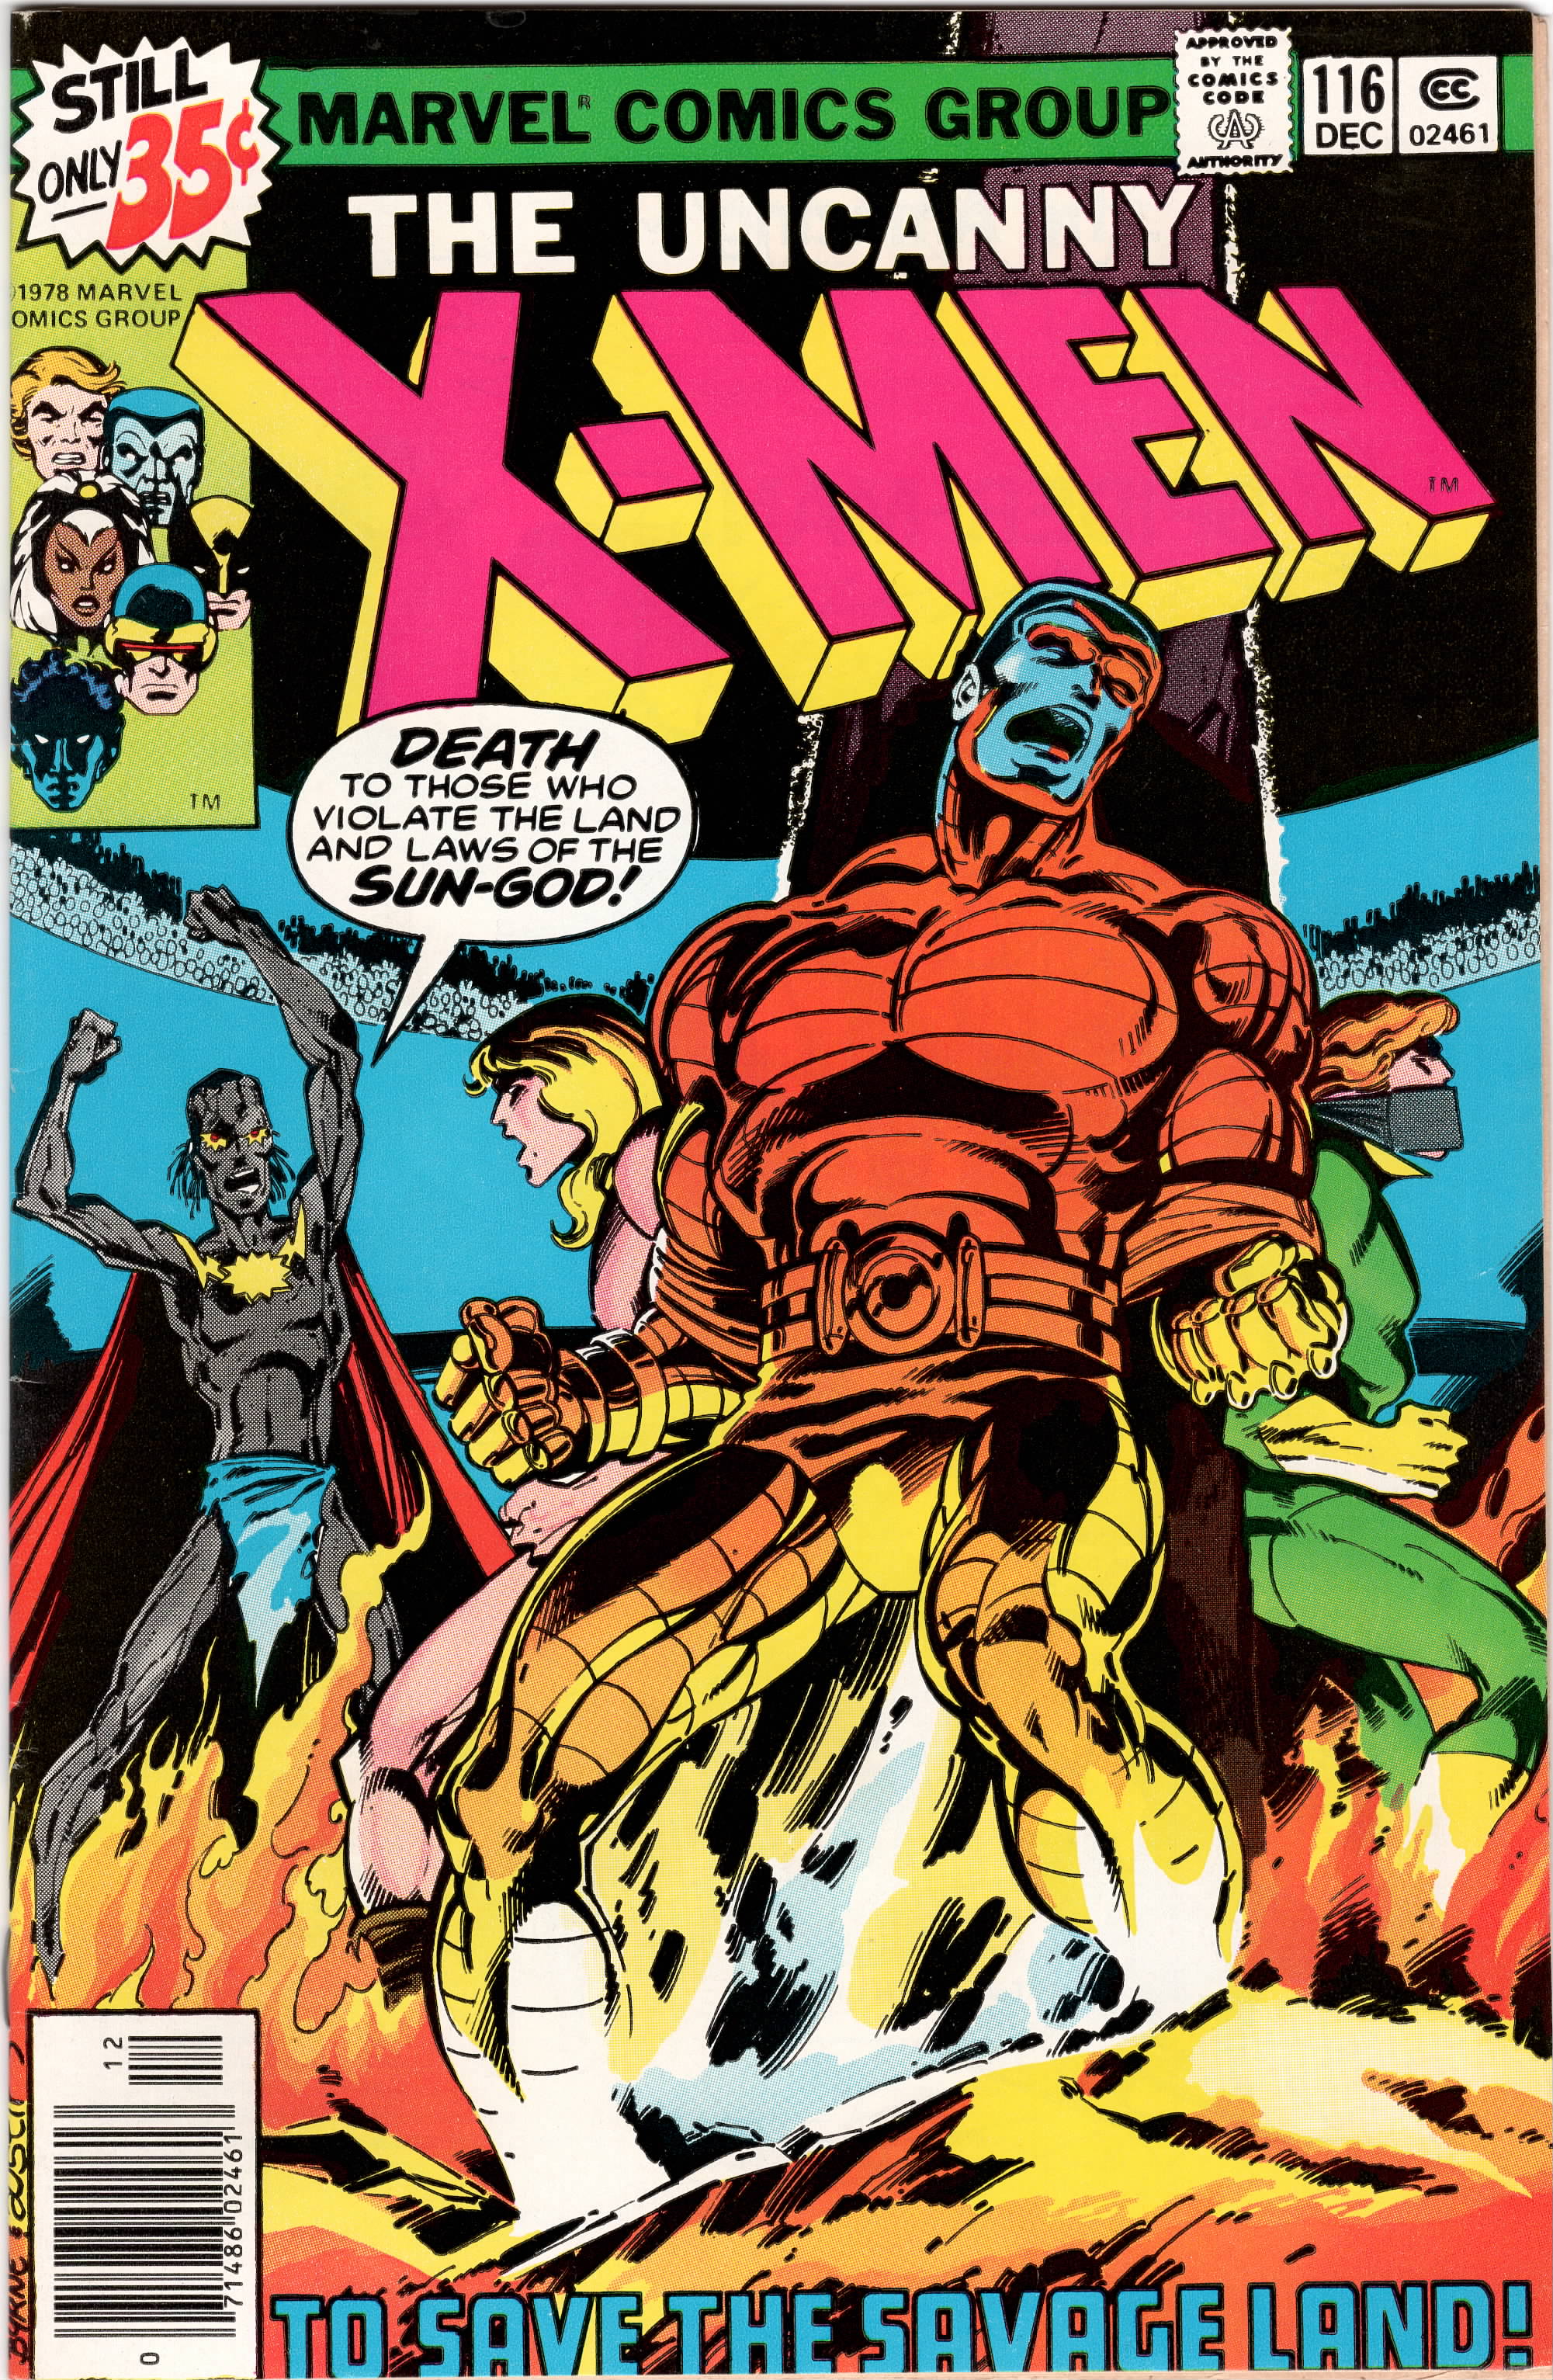 Uncanny X-Men #116